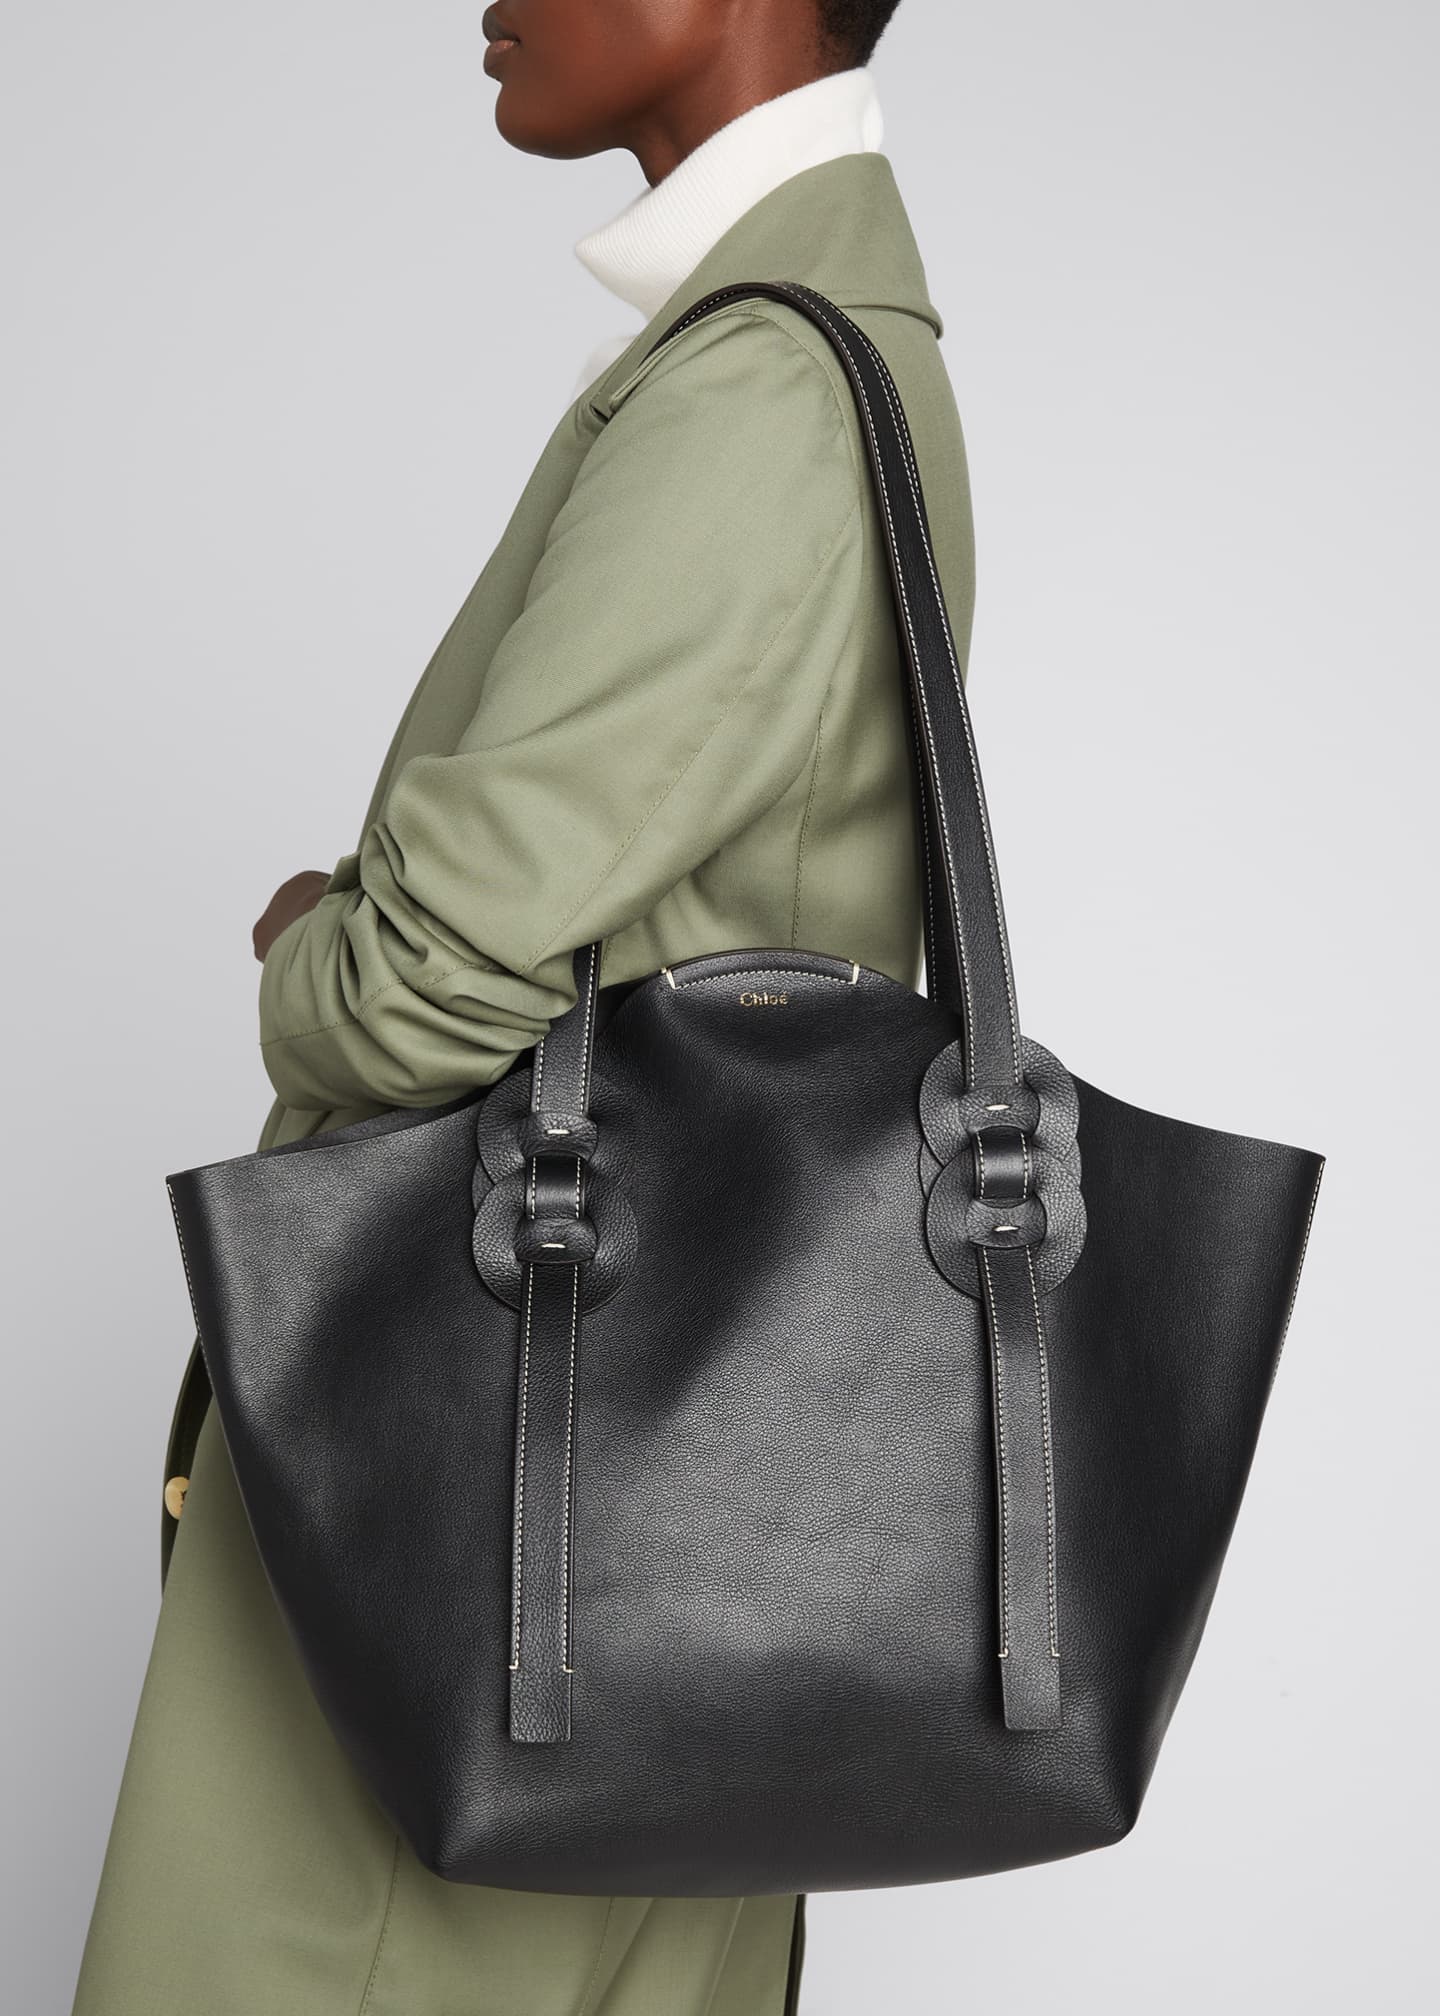 Chloe Darryl Medium Leather Tote Bag - Bergdorf Goodman